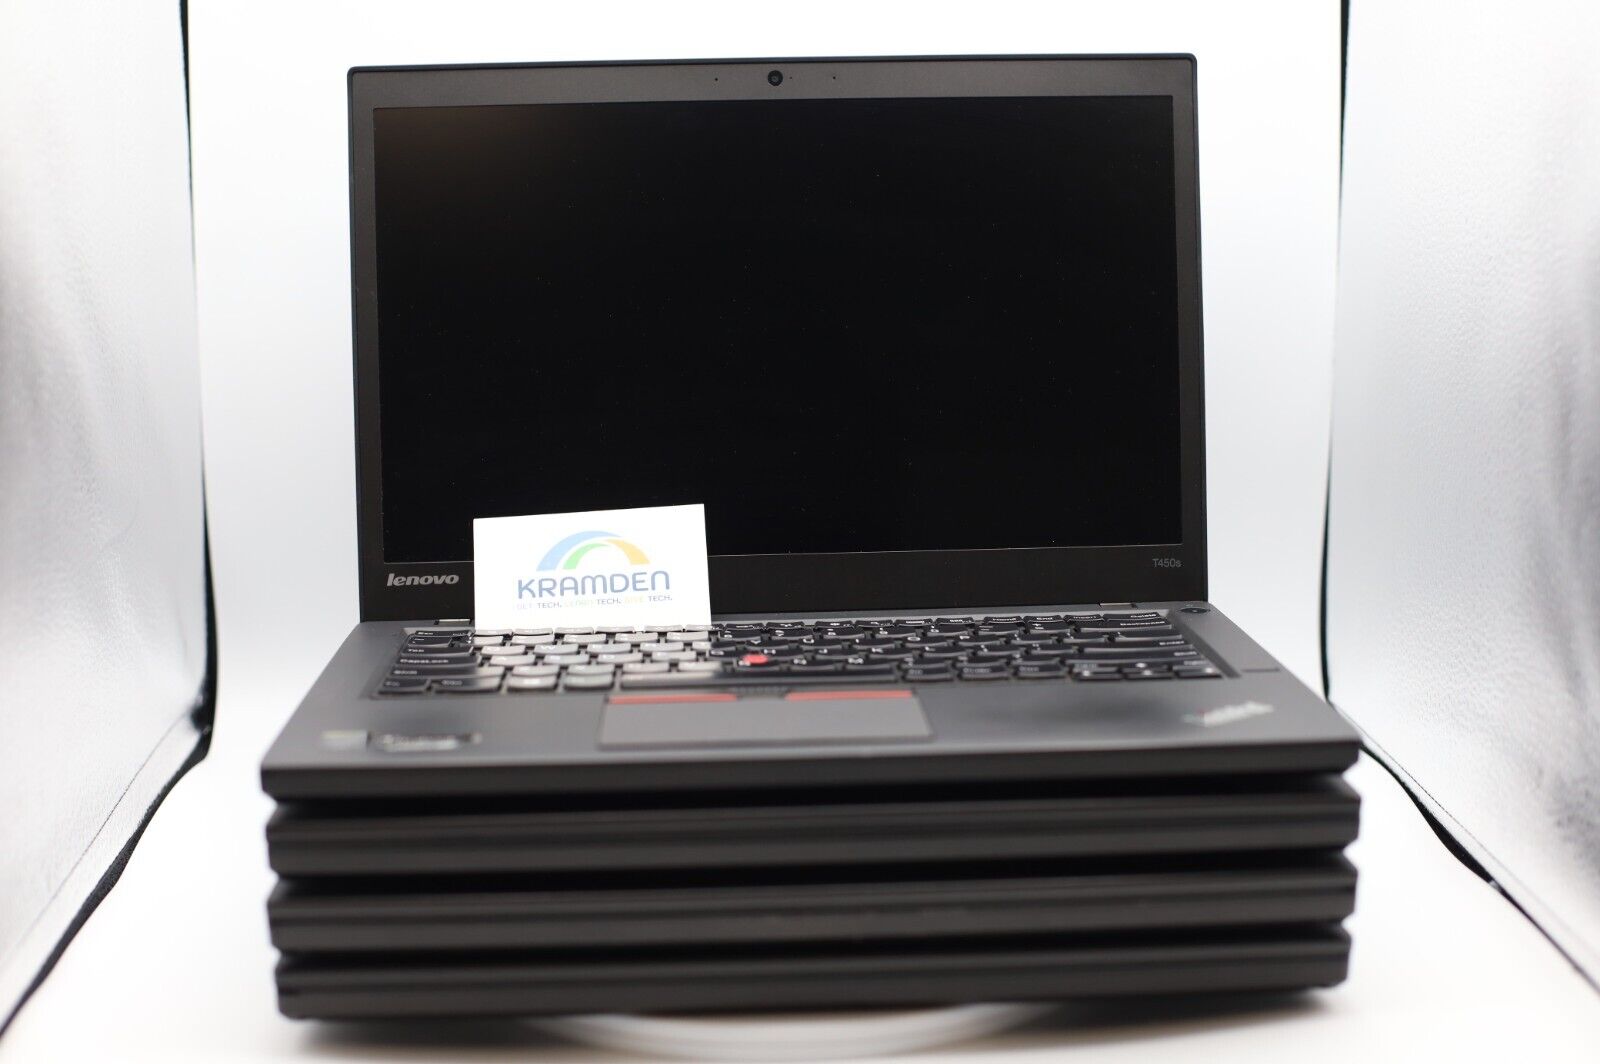 Lot of 4 Lenovo ThinkPad T450s, i7-5600U, 12GB RAM, No HDD/OS, Grade C, B6